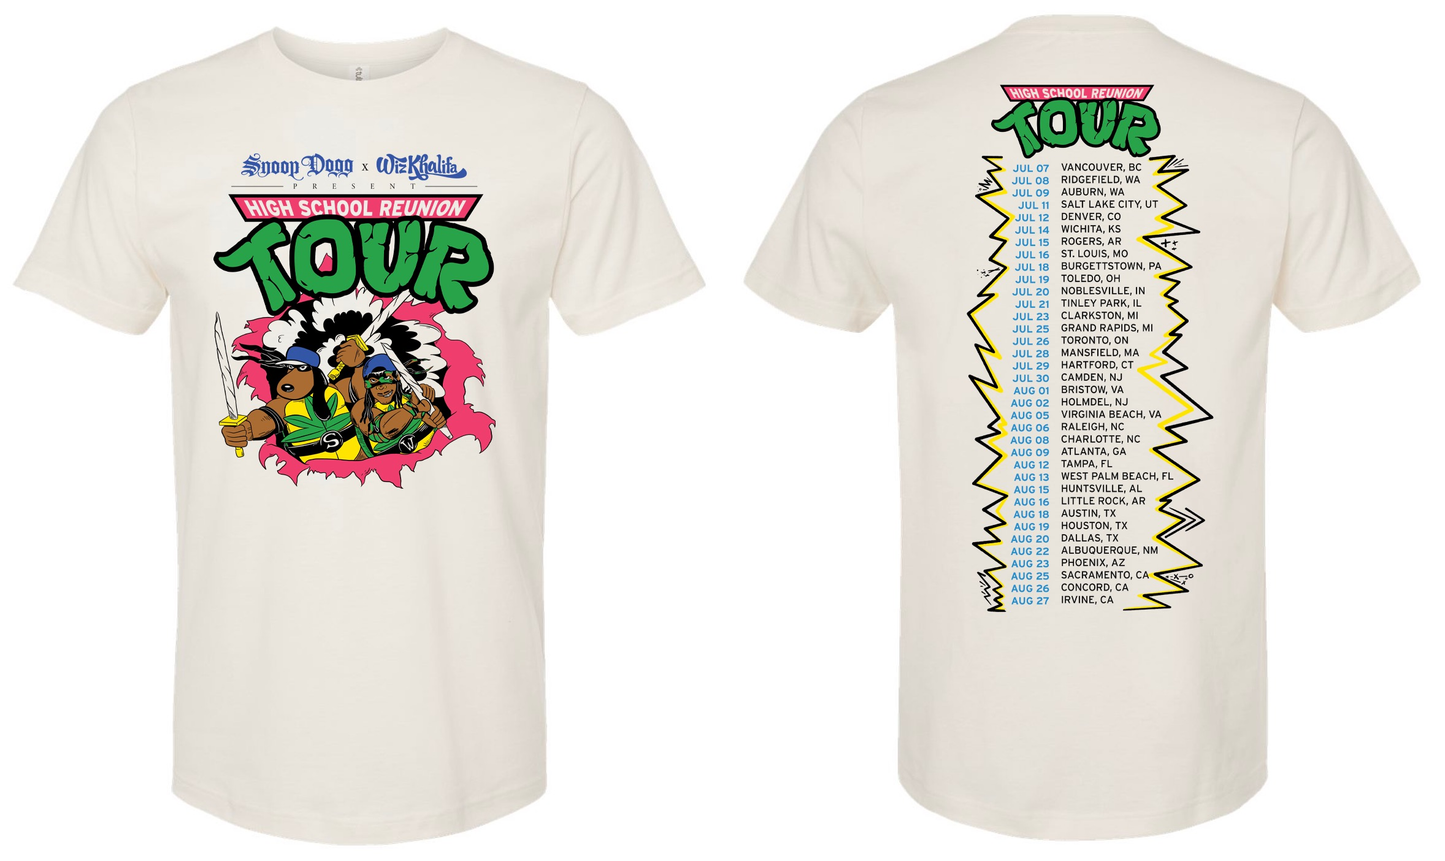 Snoop Dogg's "High School Reunion Tour 2023" T-shirt